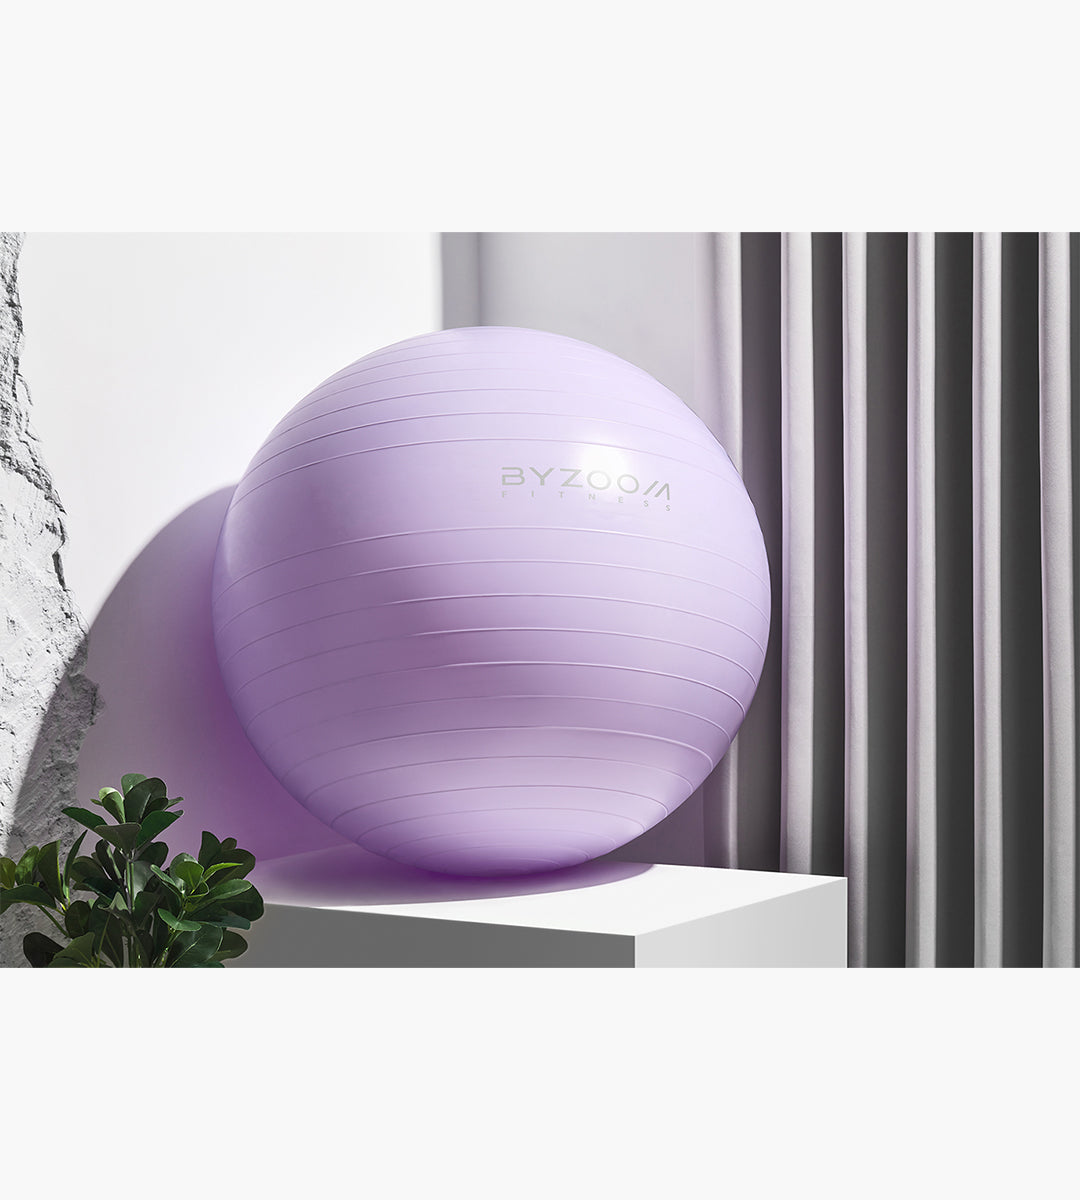 Gym Ball (purple)